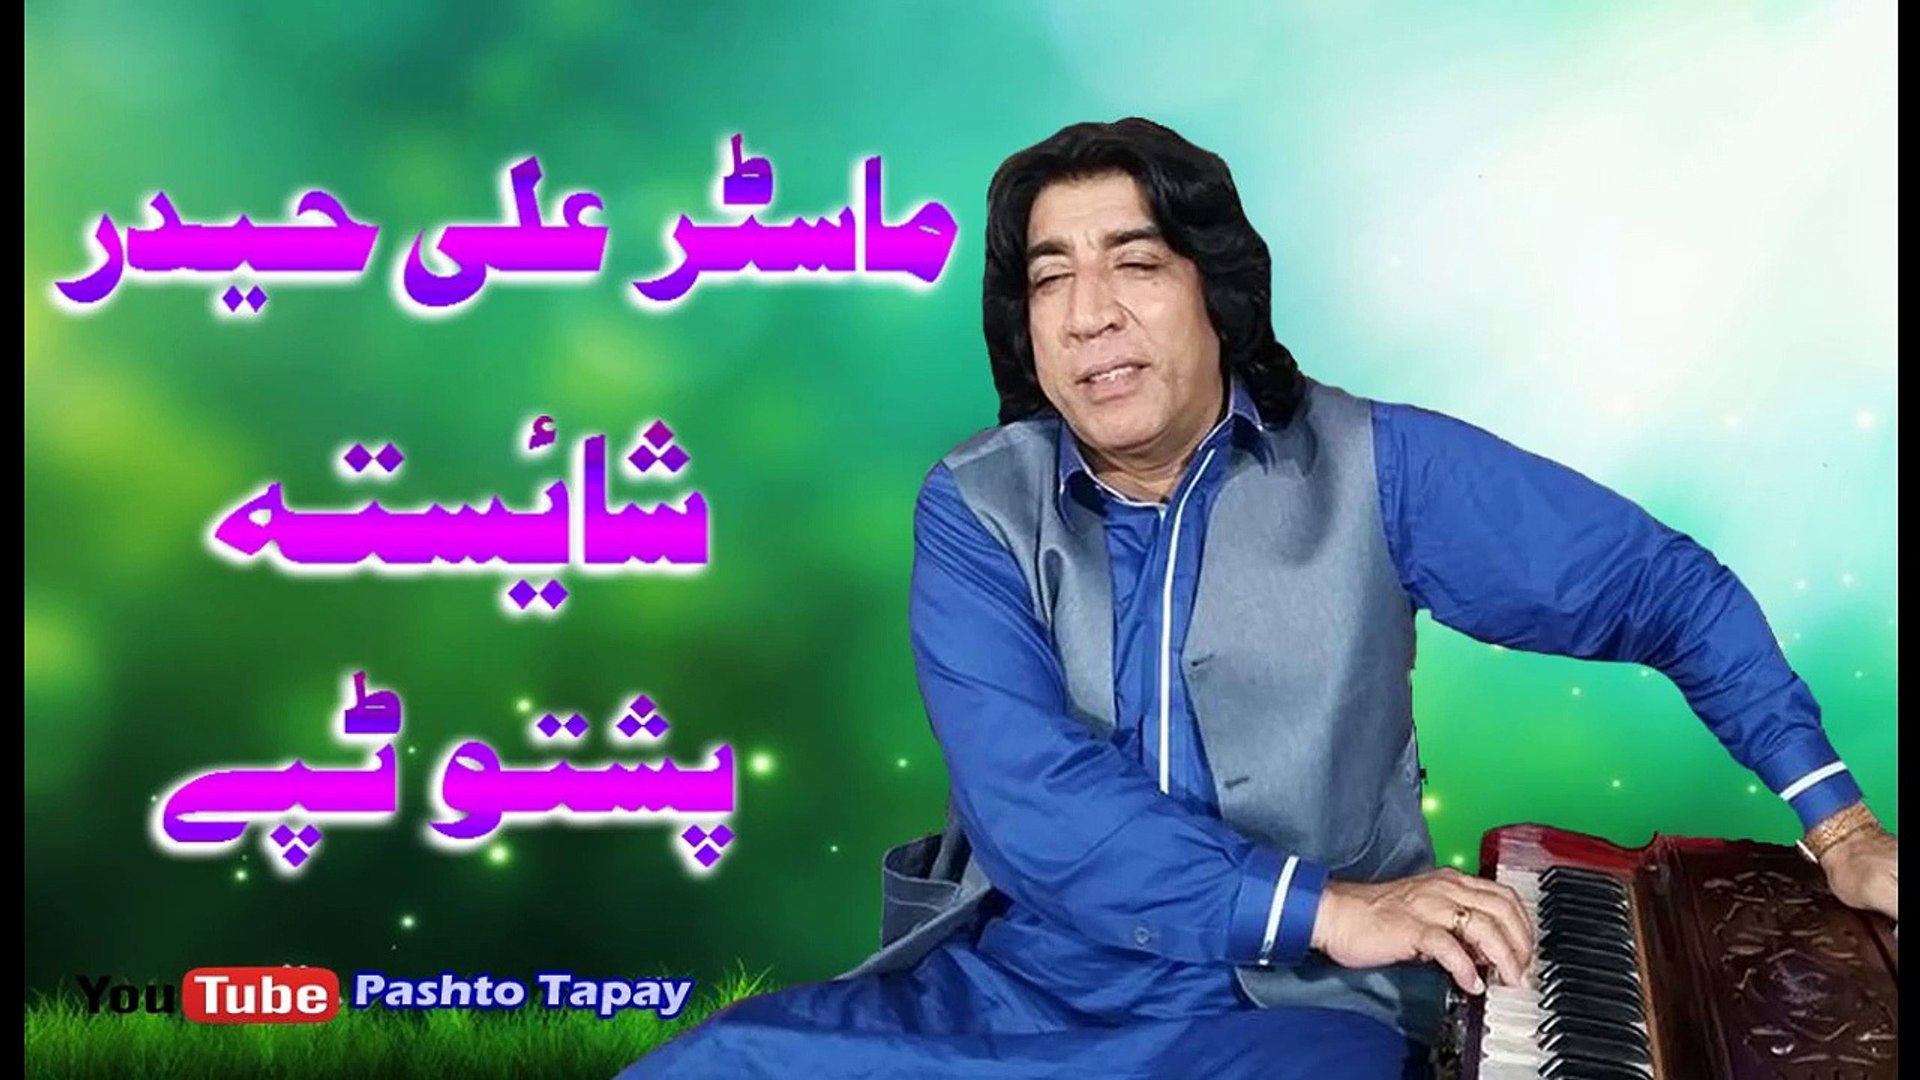 Pashto Tapay 2016 New Janana Tappy Master Ali Haider Old Tapey In 2016 -  YouTube - video Dailymotion